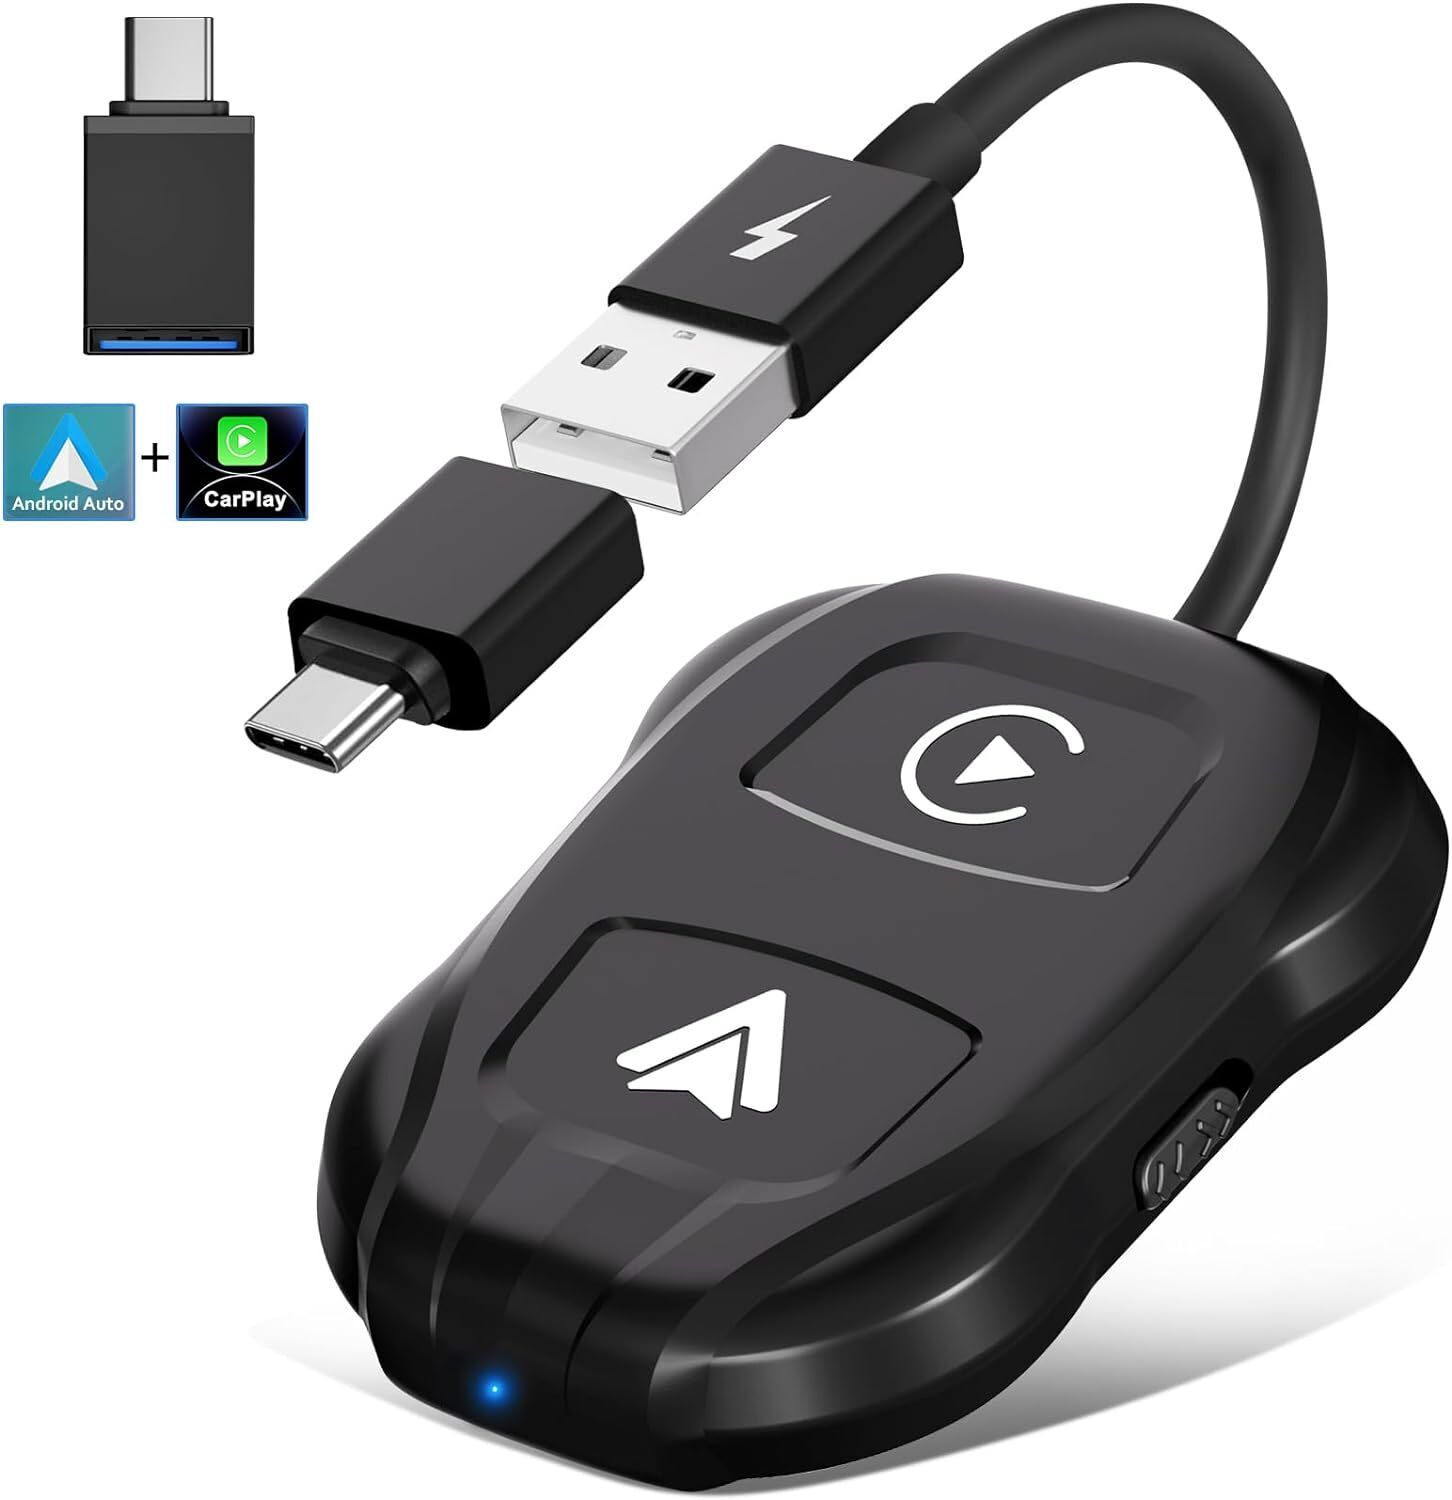 Wireless Carplay Adapter,Bluetooth Wireless Adapter for Andriod Auto iOS